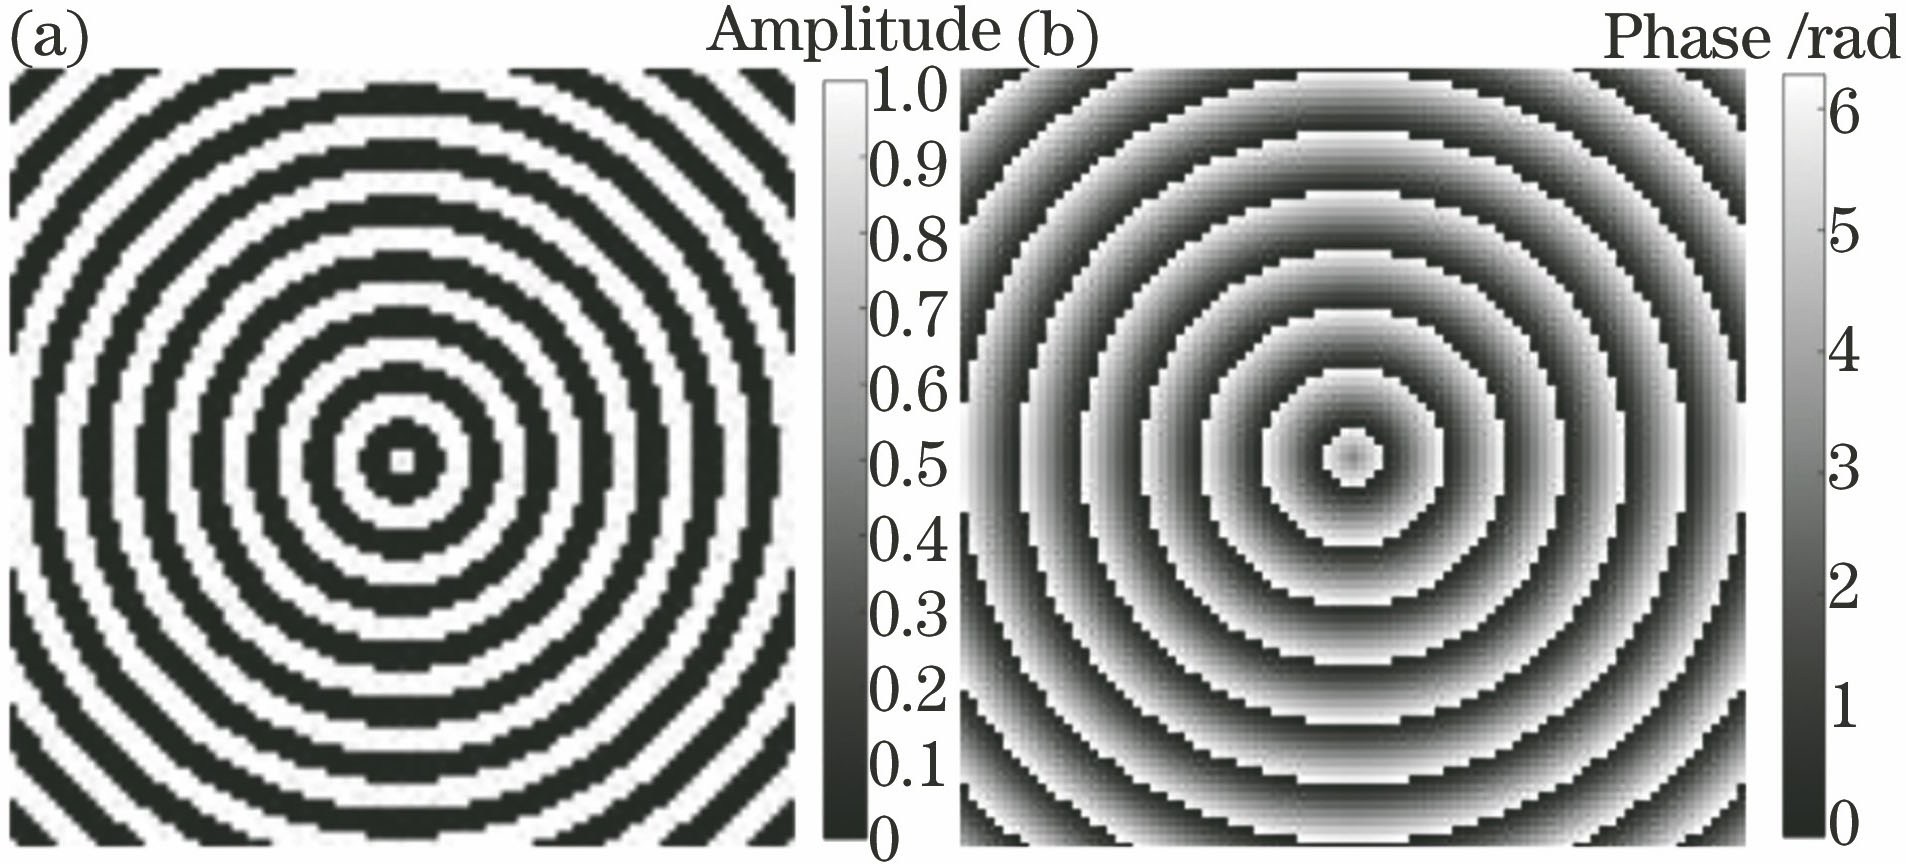 (a) Annular amplitude grating; (b) annular phase grating